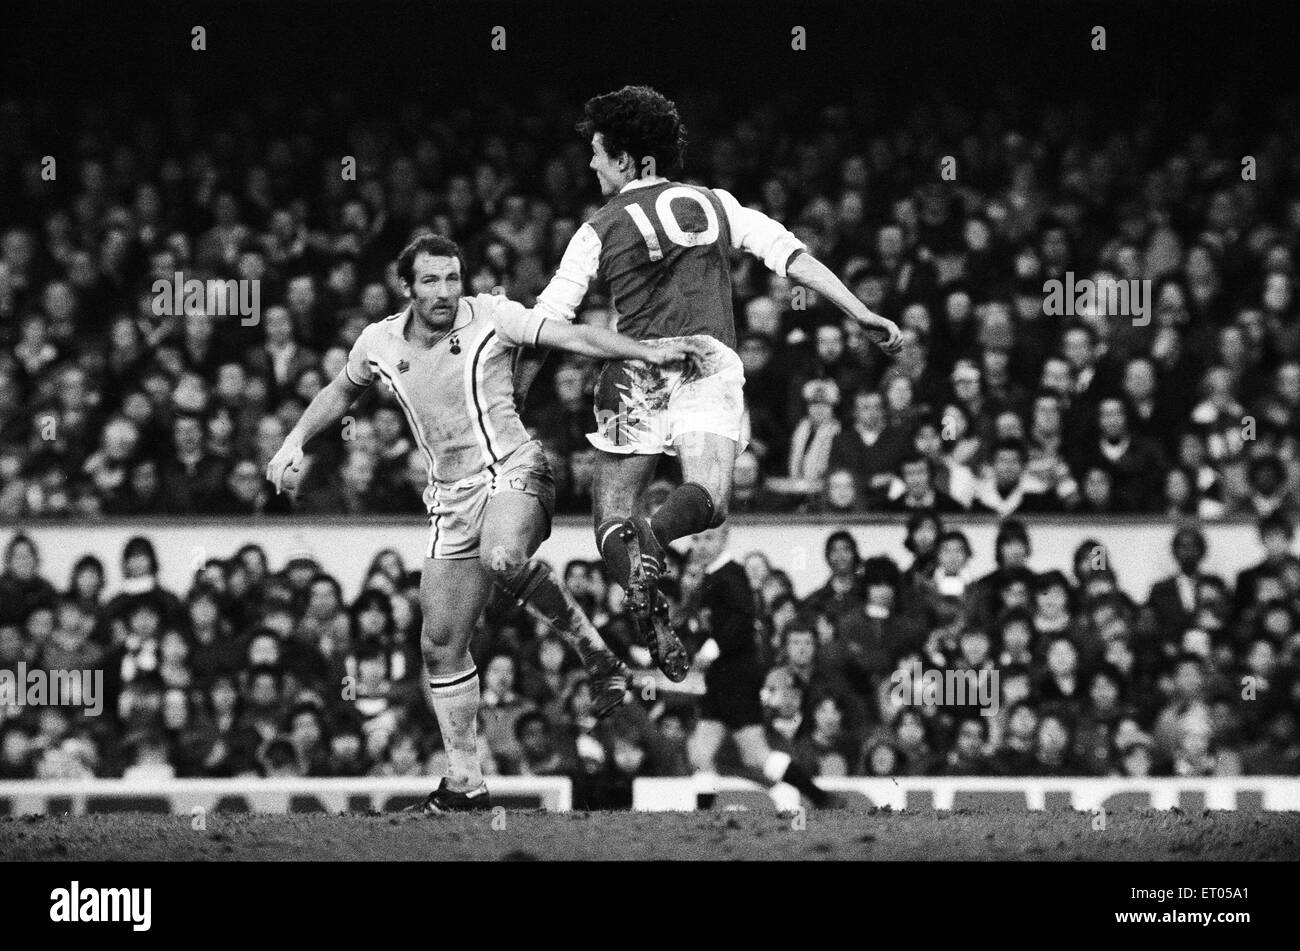 Arsenal 3-1 Coventry City, FA Cup Match à Highbury, samedi 29 janvier 1977. Banque D'Images